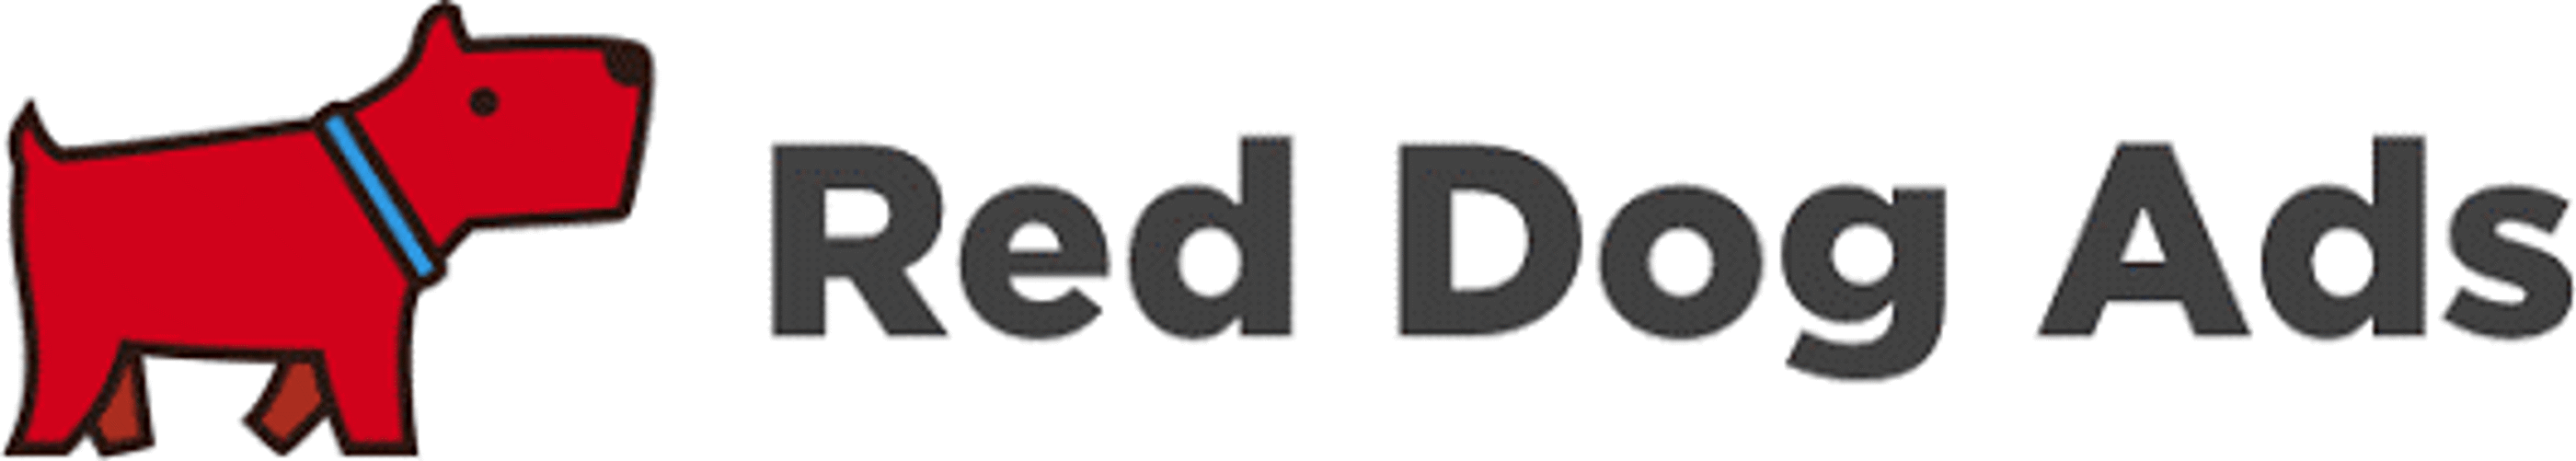 Red Dog Ads logo.png